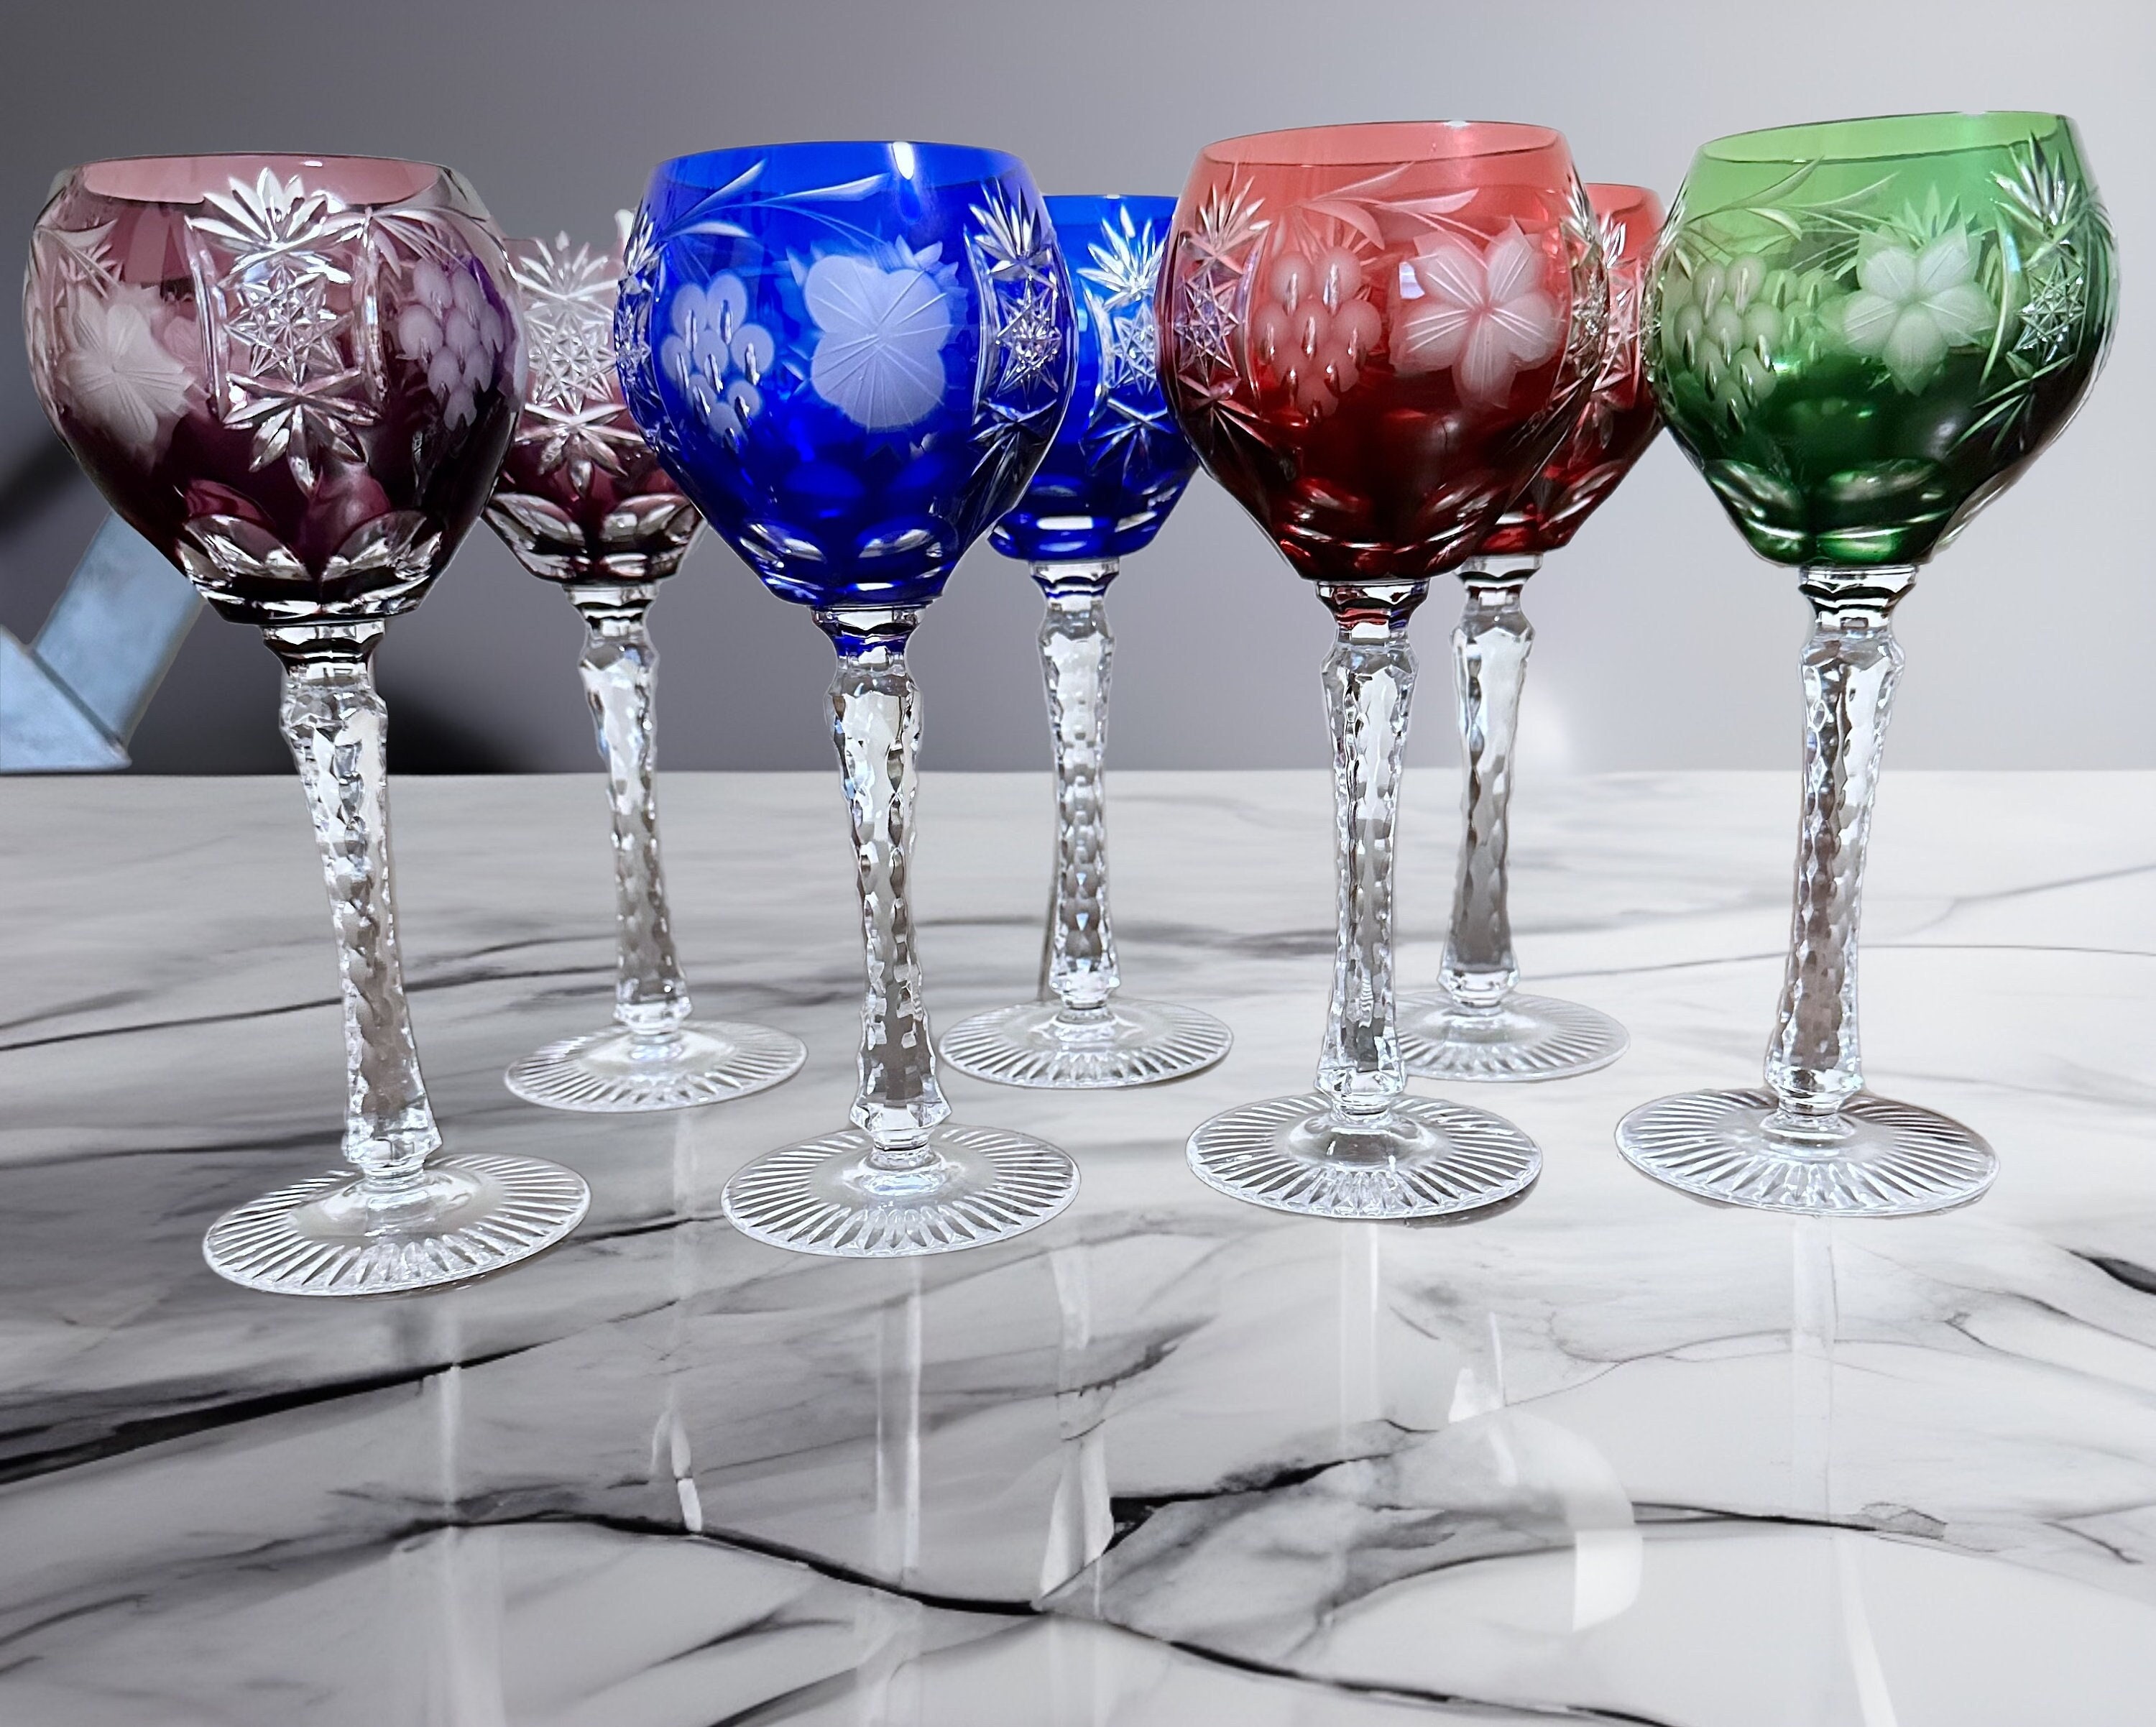 Set of 2 Cut Crystal Drinking Glasses - 250 ml for Hot or Cold Liquids -  fits Metal Glass Holder Podstakannik